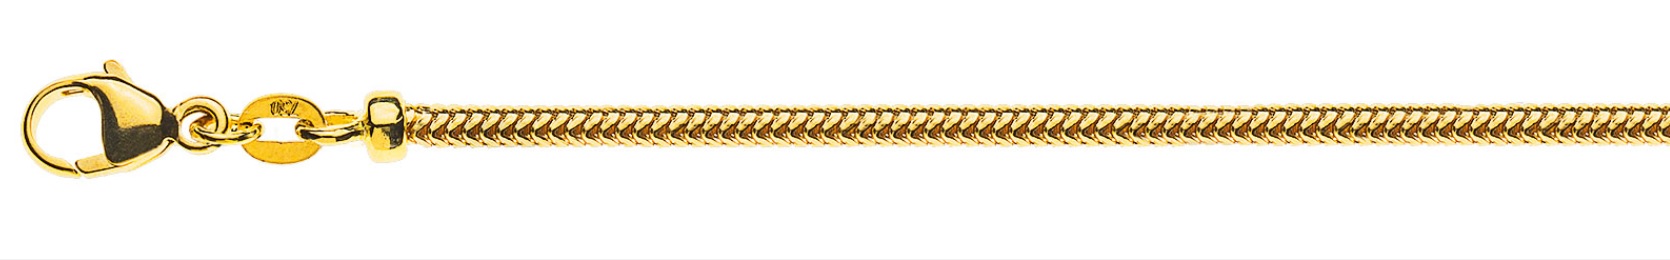 AURONOS Prestige Necklace yellow gold 18K snake chain 40cm 2.4mm